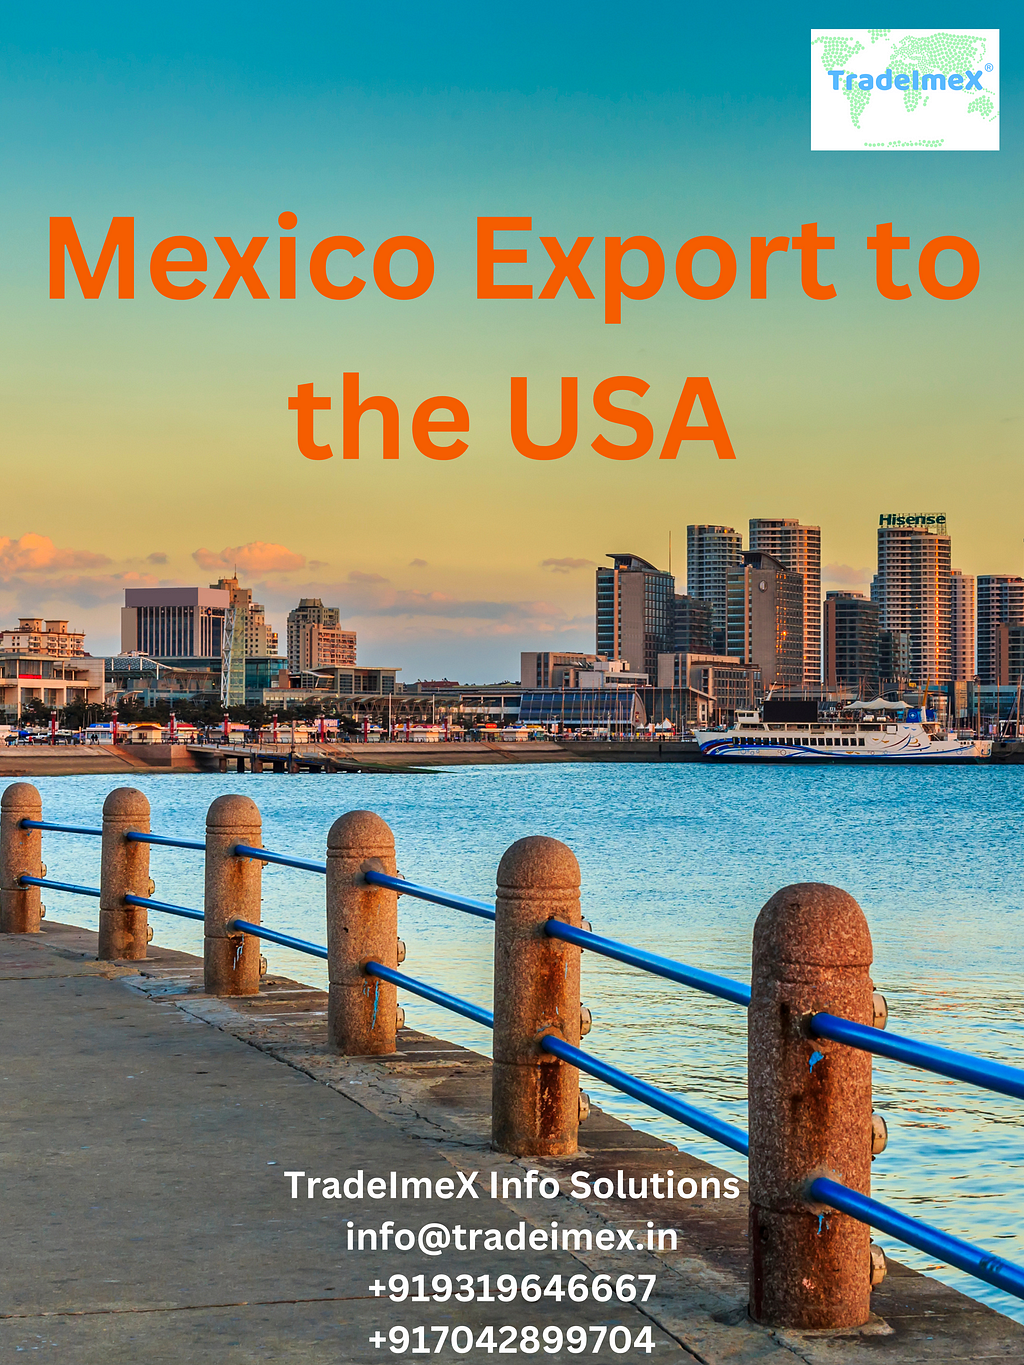 Mexico export data